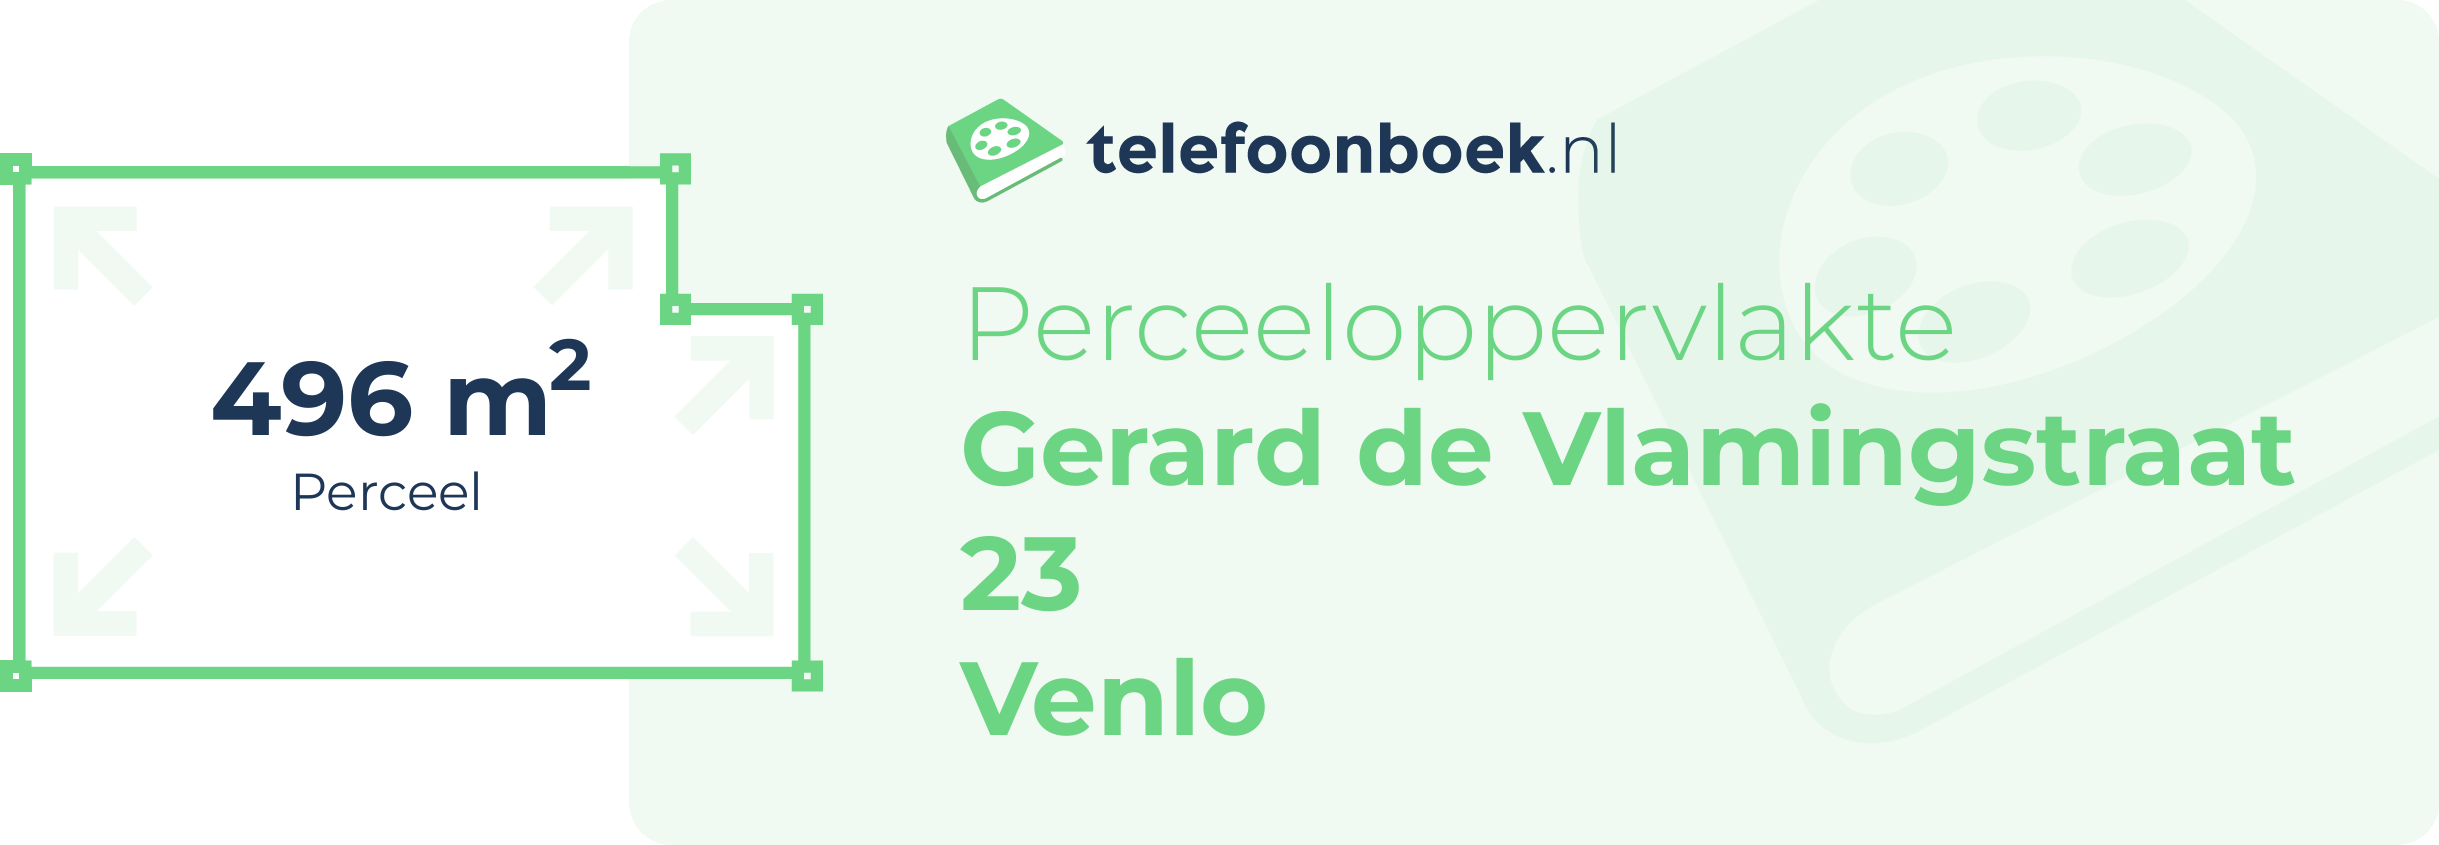 Perceeloppervlakte Gerard De Vlamingstraat 23 Venlo